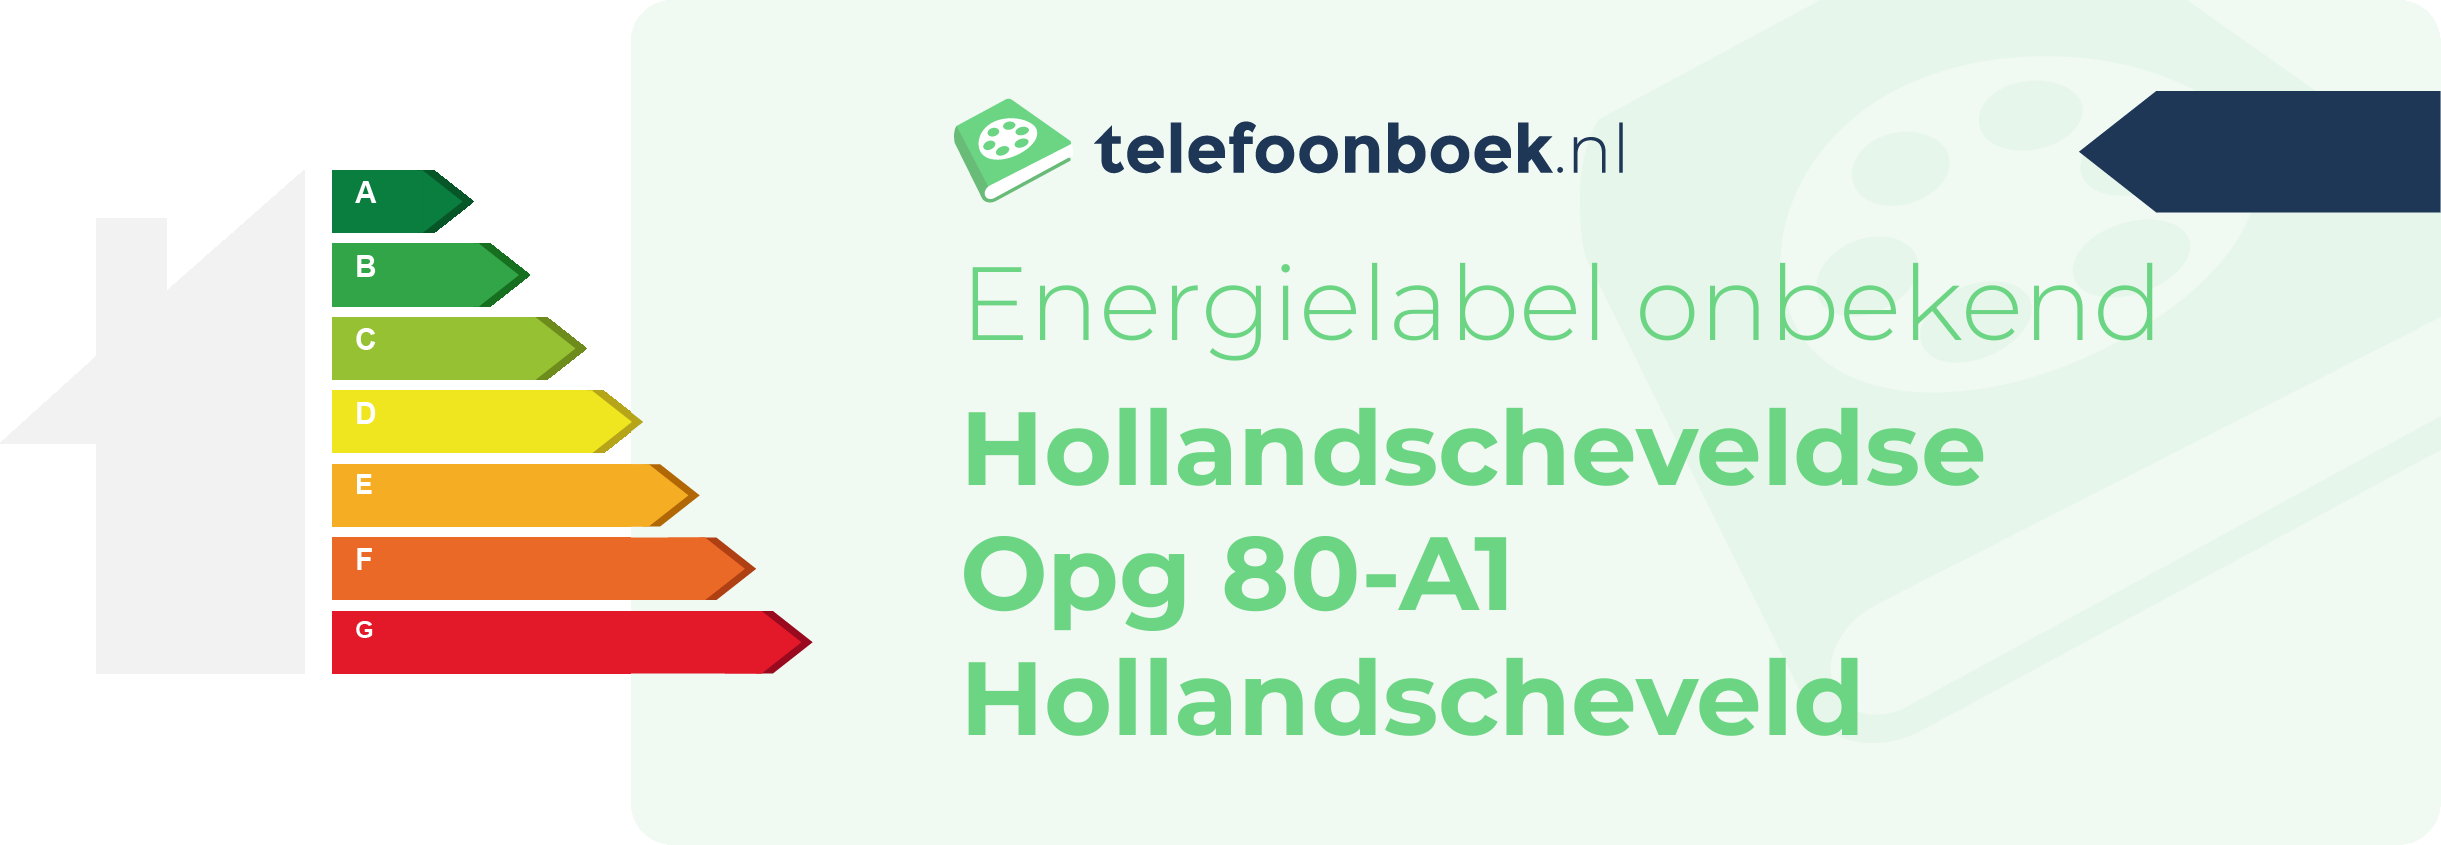 Energielabel Hollandscheveldse Opg 80-A1 Hollandscheveld